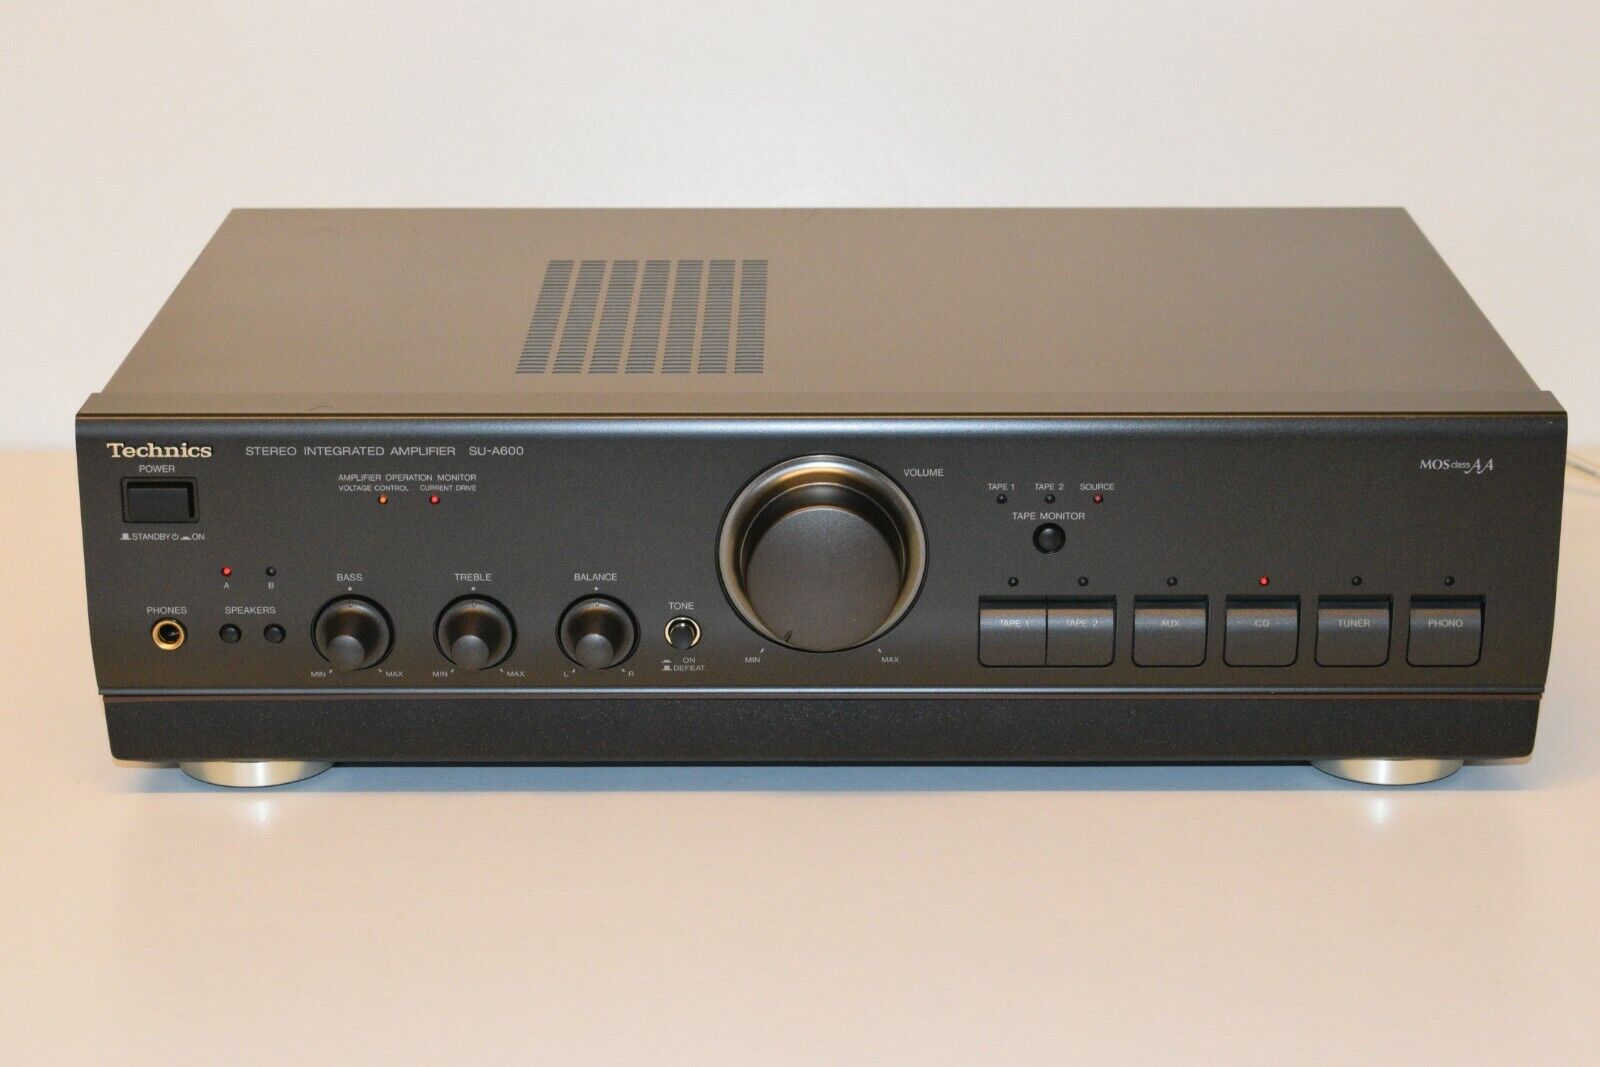 Details zu  Technics SU-A600 Stereo Integrated Amplifier Hi-Fi Separate Phono Amp Inventar mit dem niedrigsten Preis